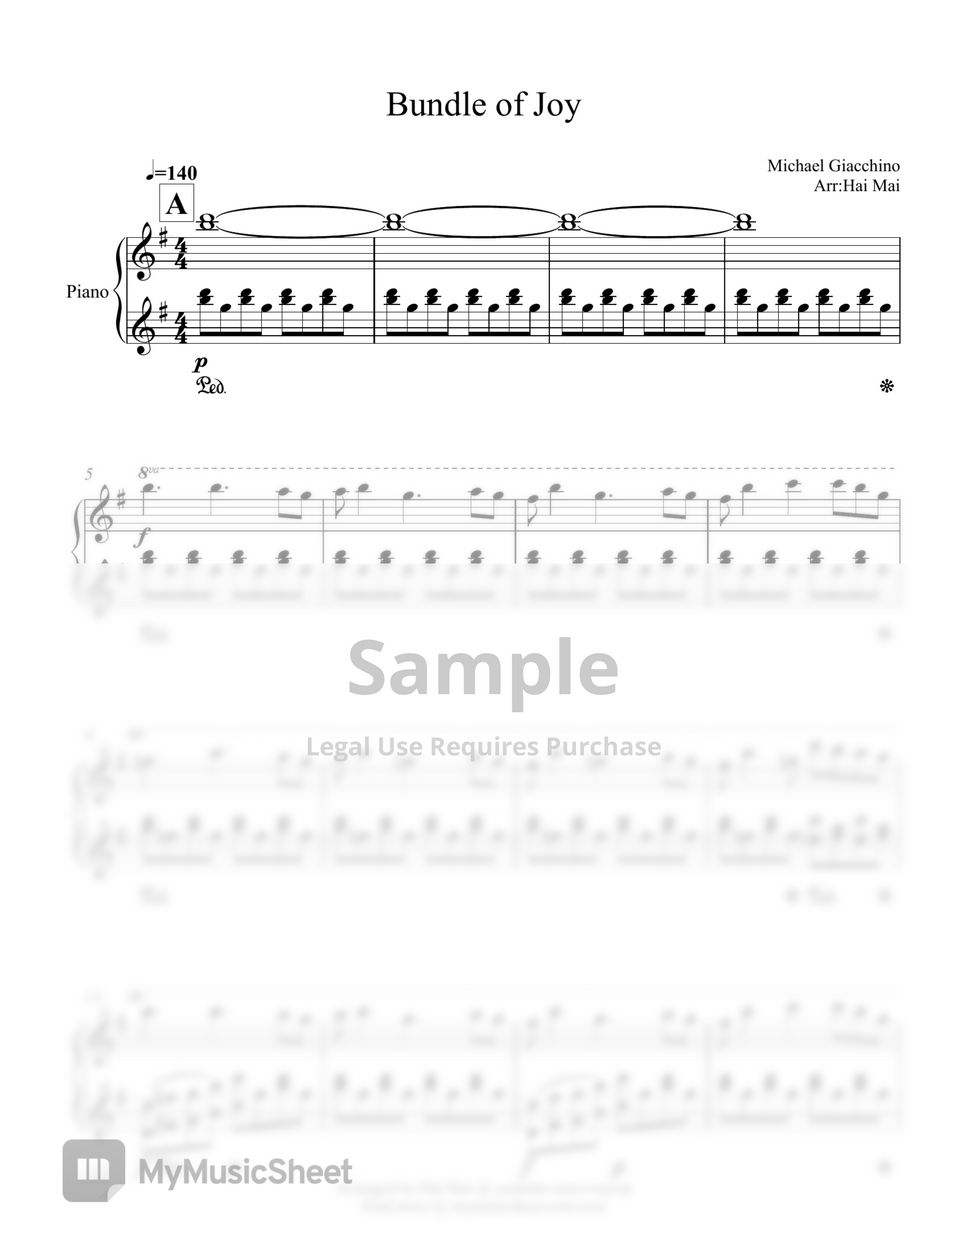 Michael Giacchino - Bundle of Joy for Piano by Hai Mai